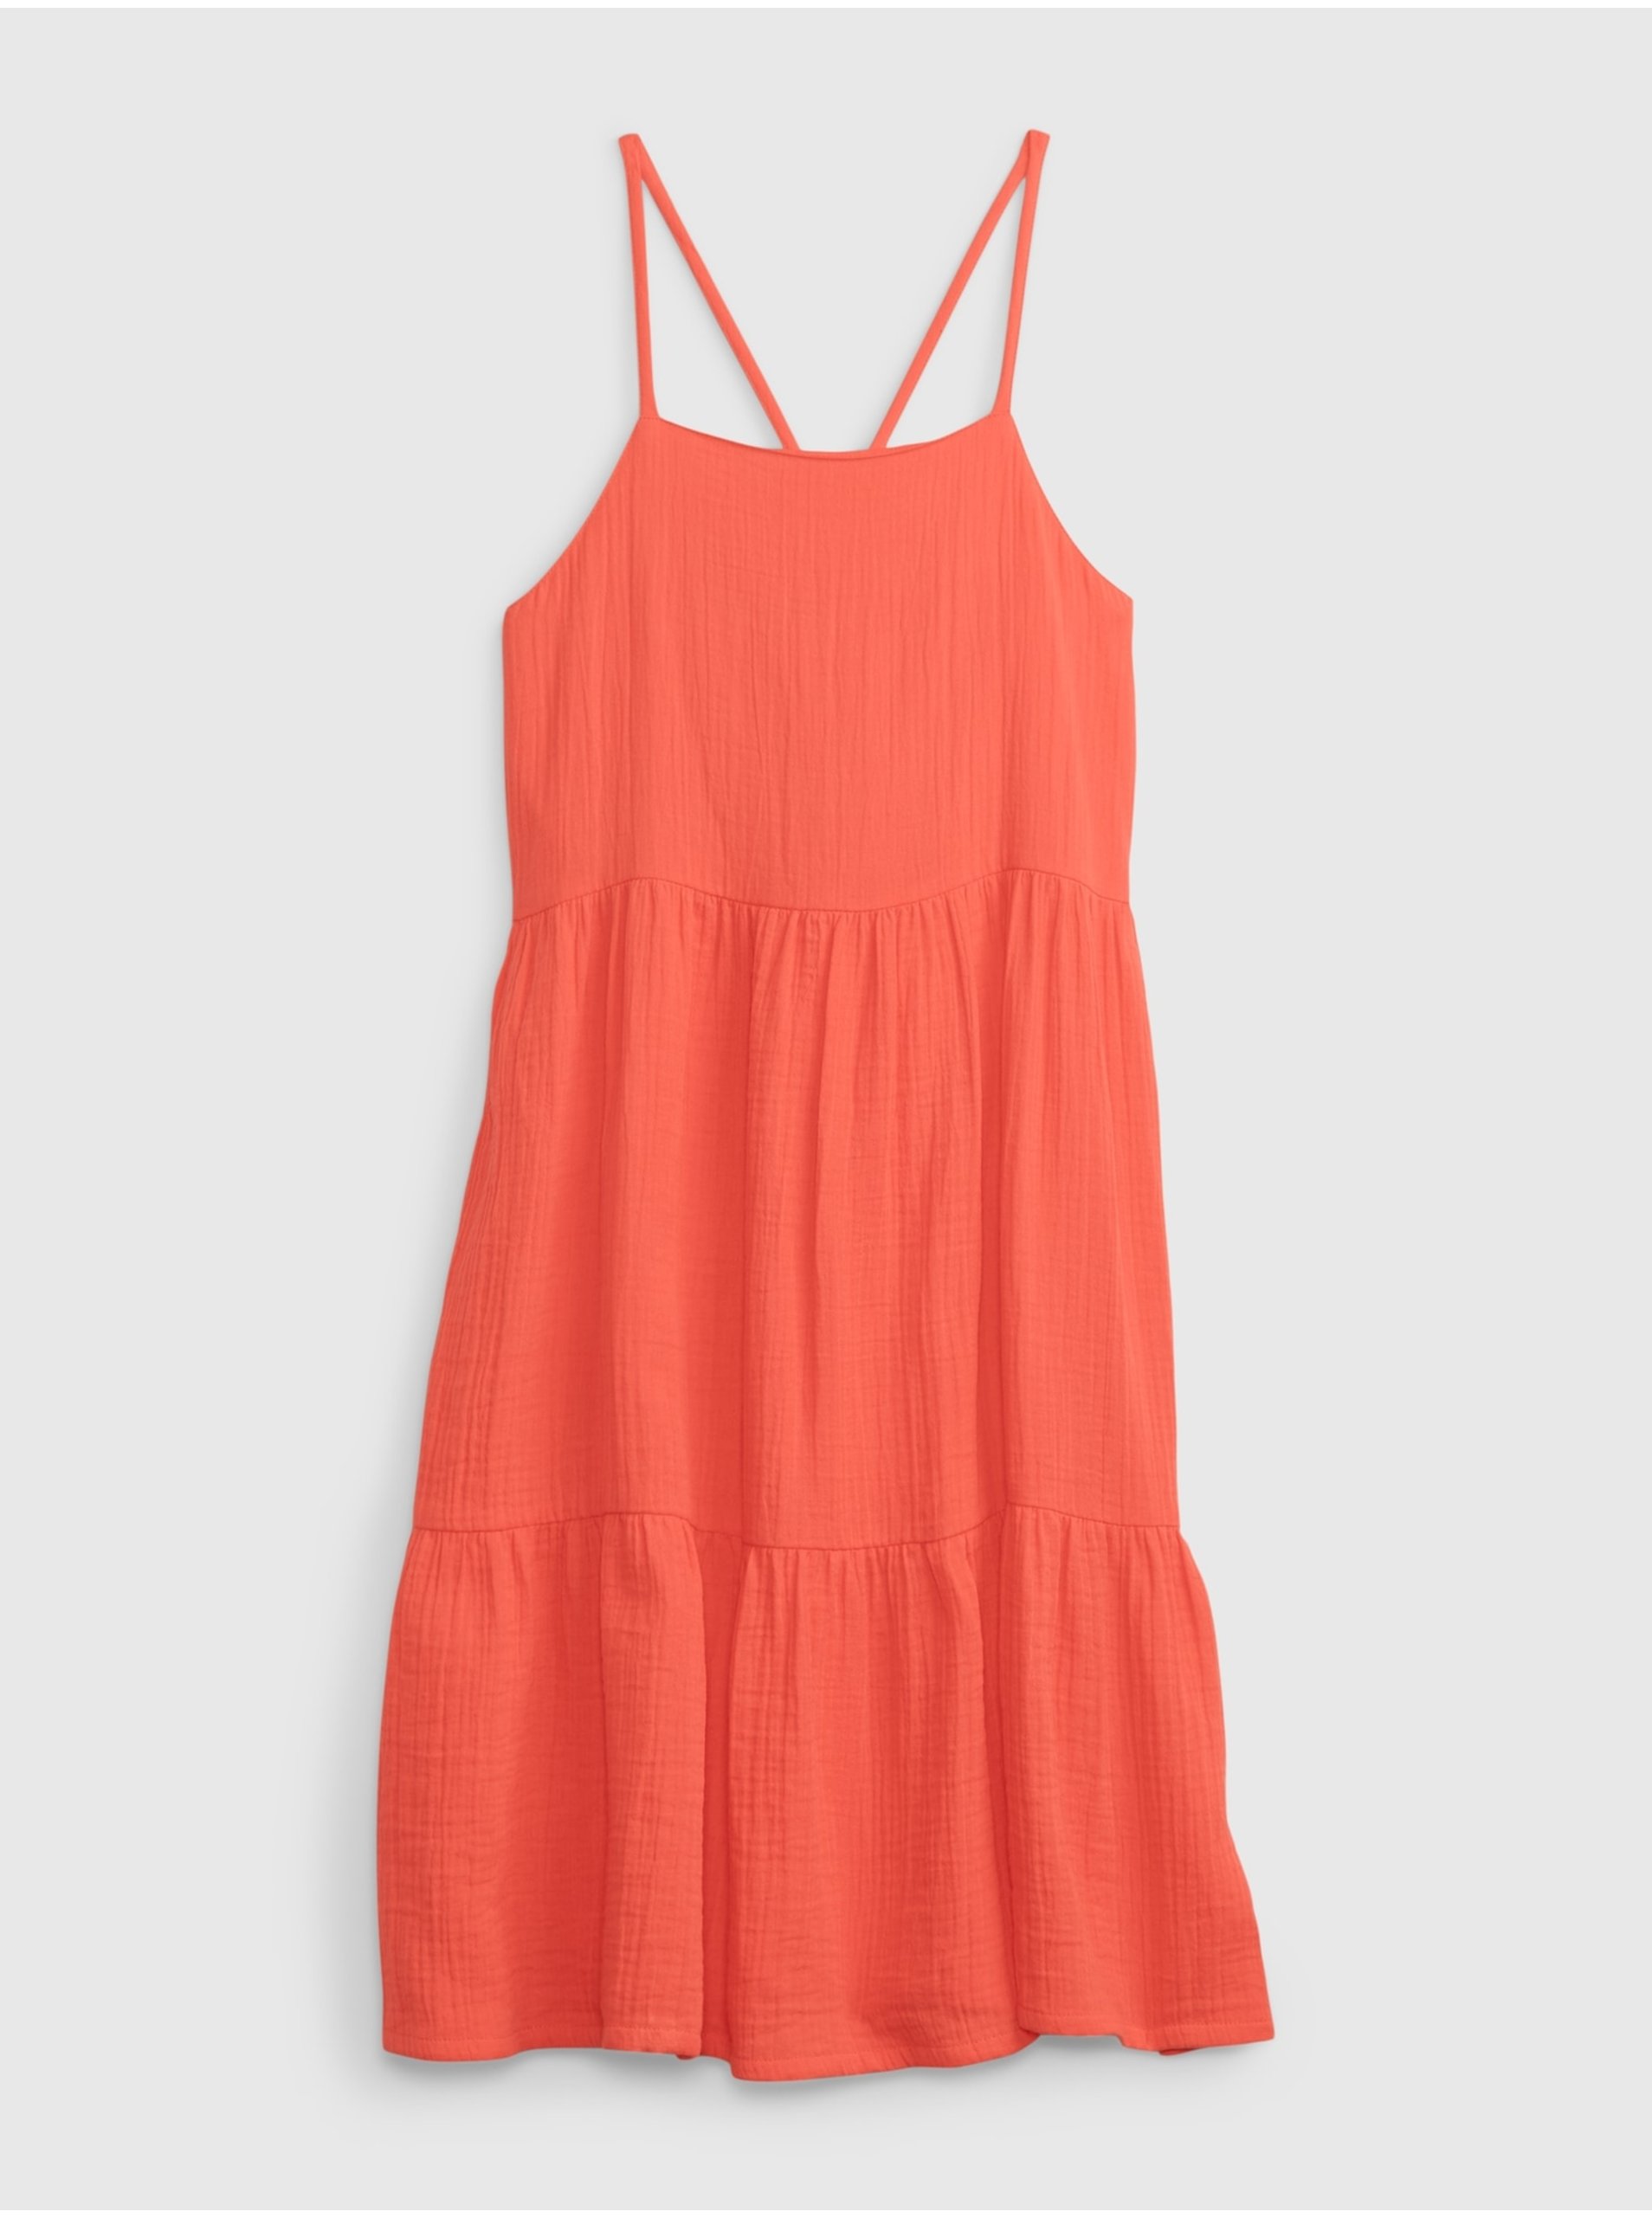 Lacno Oranžové dievčenské volánové šaty